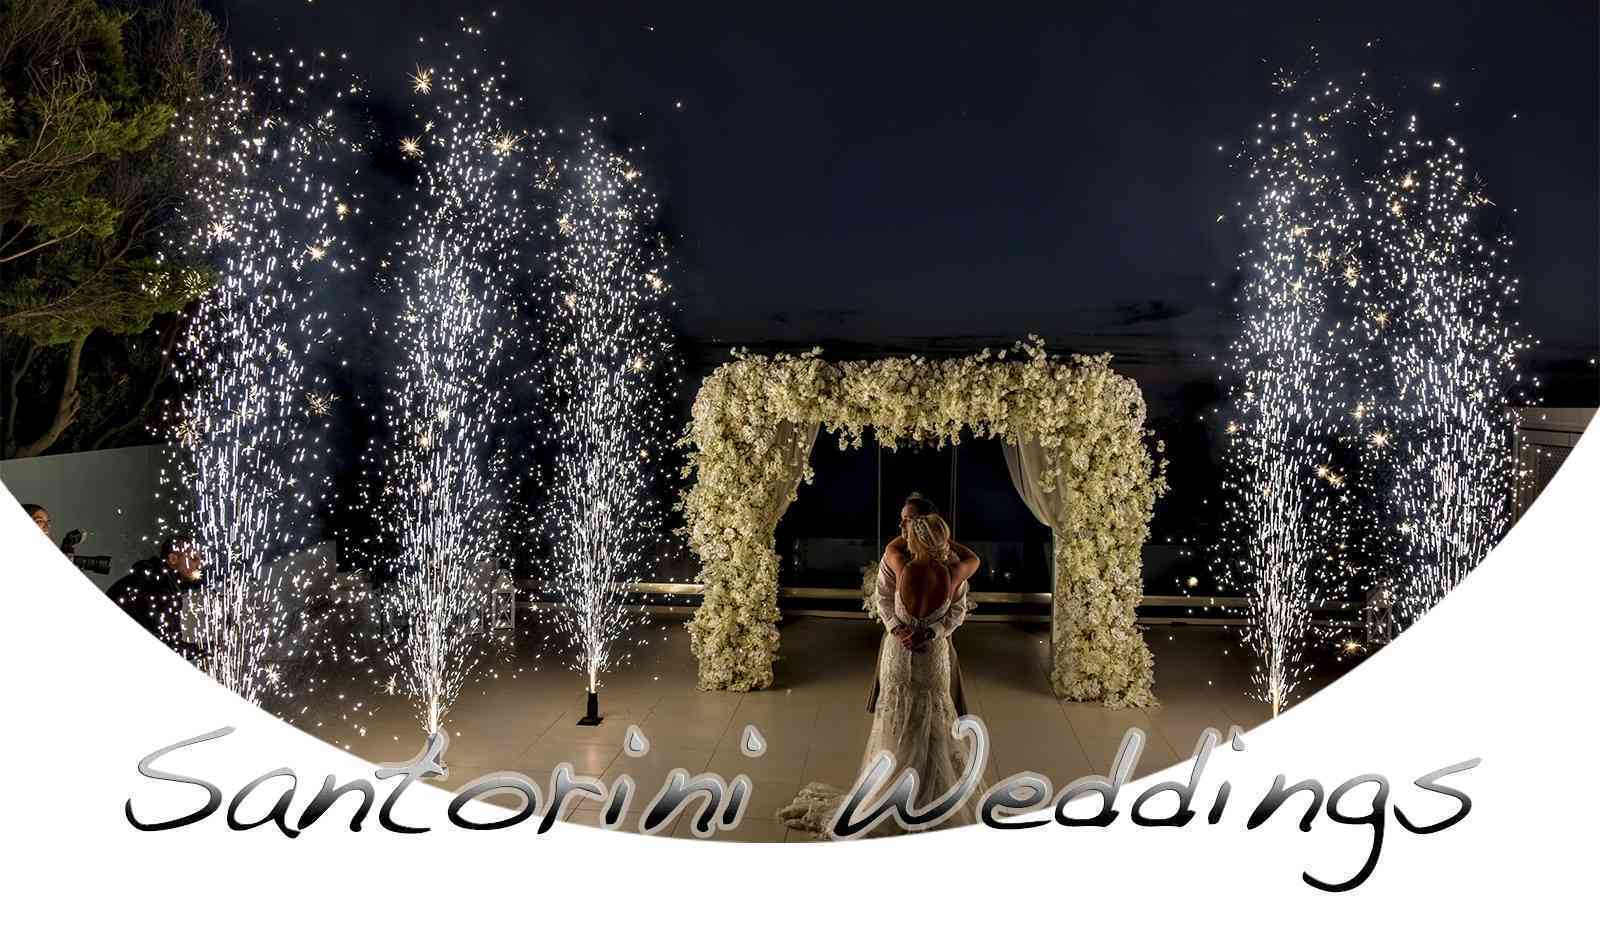 Fountains at Le ciel Santorini, wedding dj in Greece, wedding packages for Santorini Greece, fireworks in Santorini at Le Ciel, Santorini Brides,